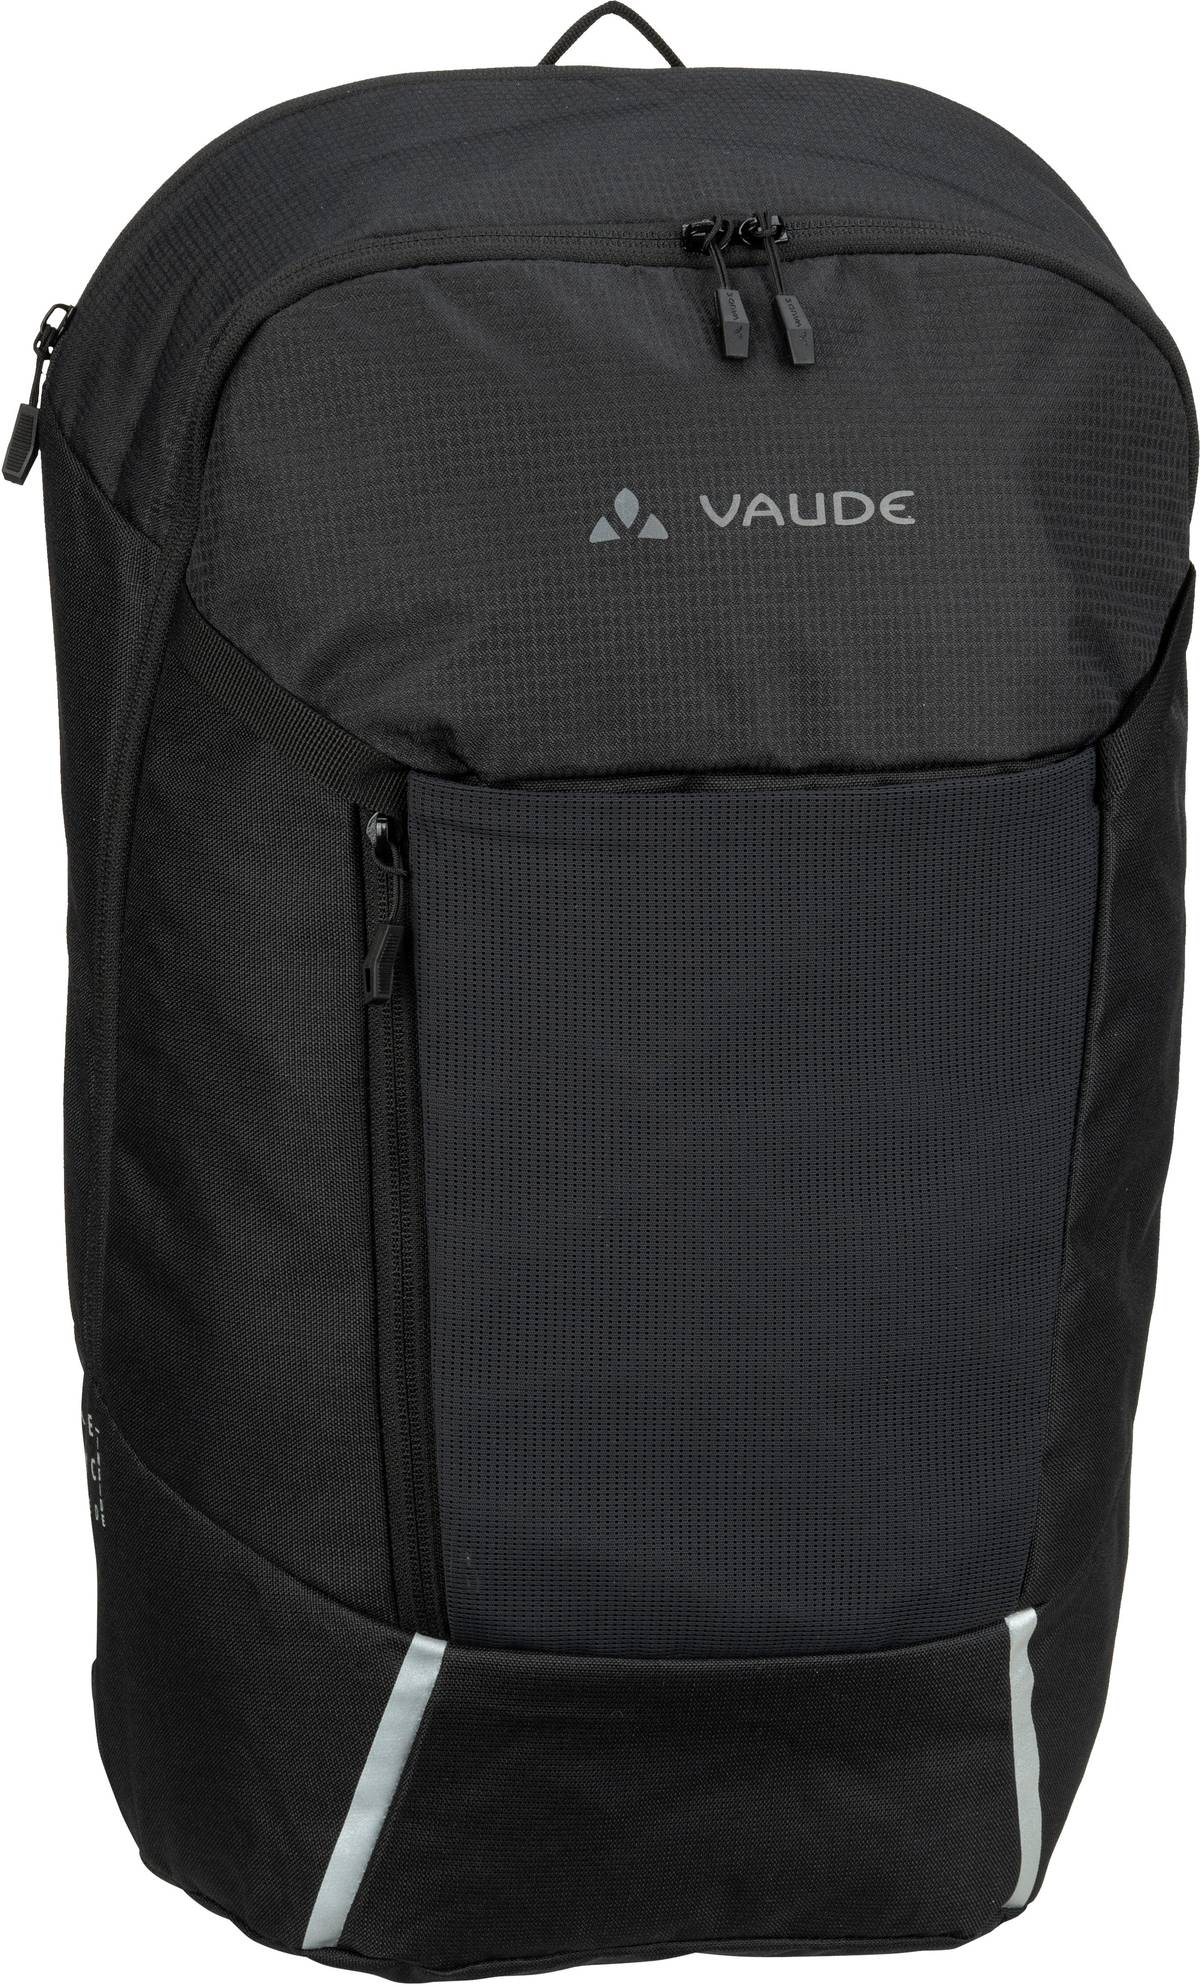 Vaude Cycle 22 Pack  in Schwarz (22 Liter), Rucksack / Backpack